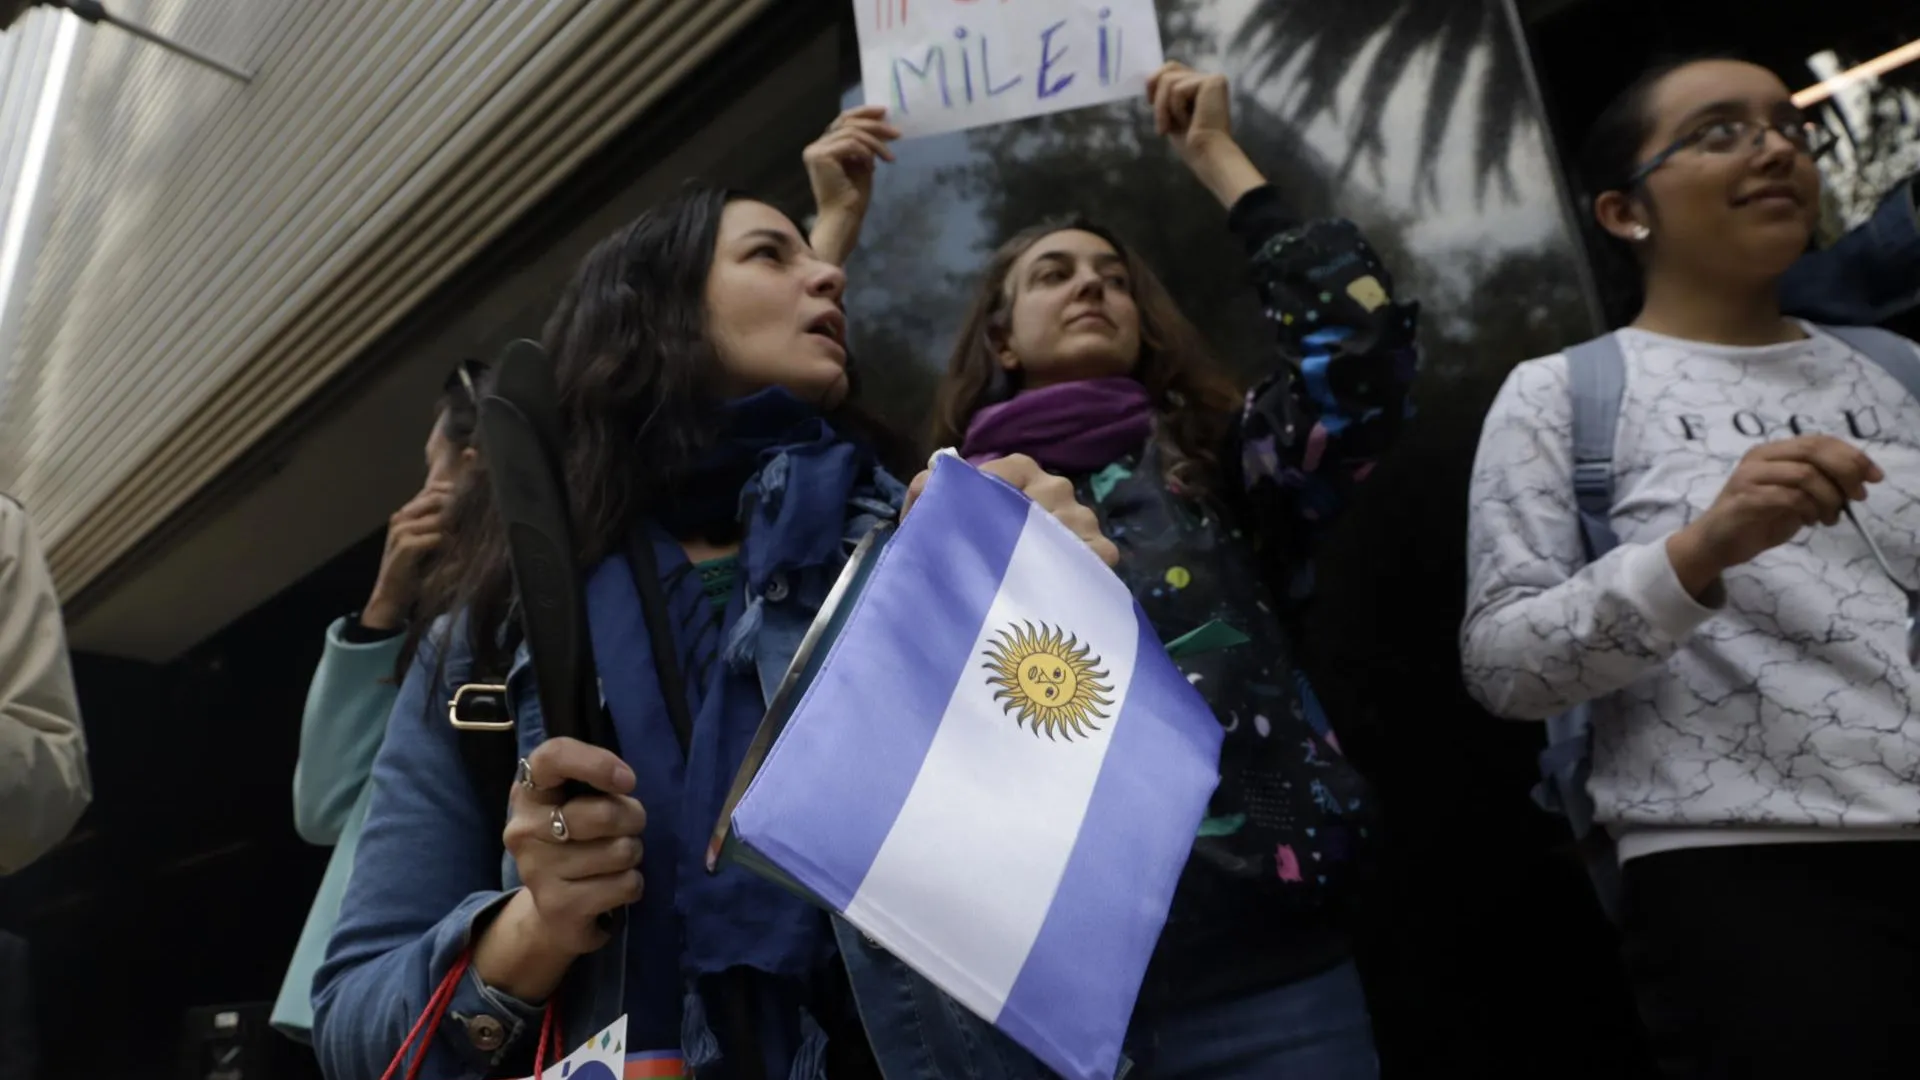 Протестанты в Буэнос-Айресе. Надпись на плакате: «Пошел вон, Милей!». Фото: Luis Barron / Keystone Press Agency